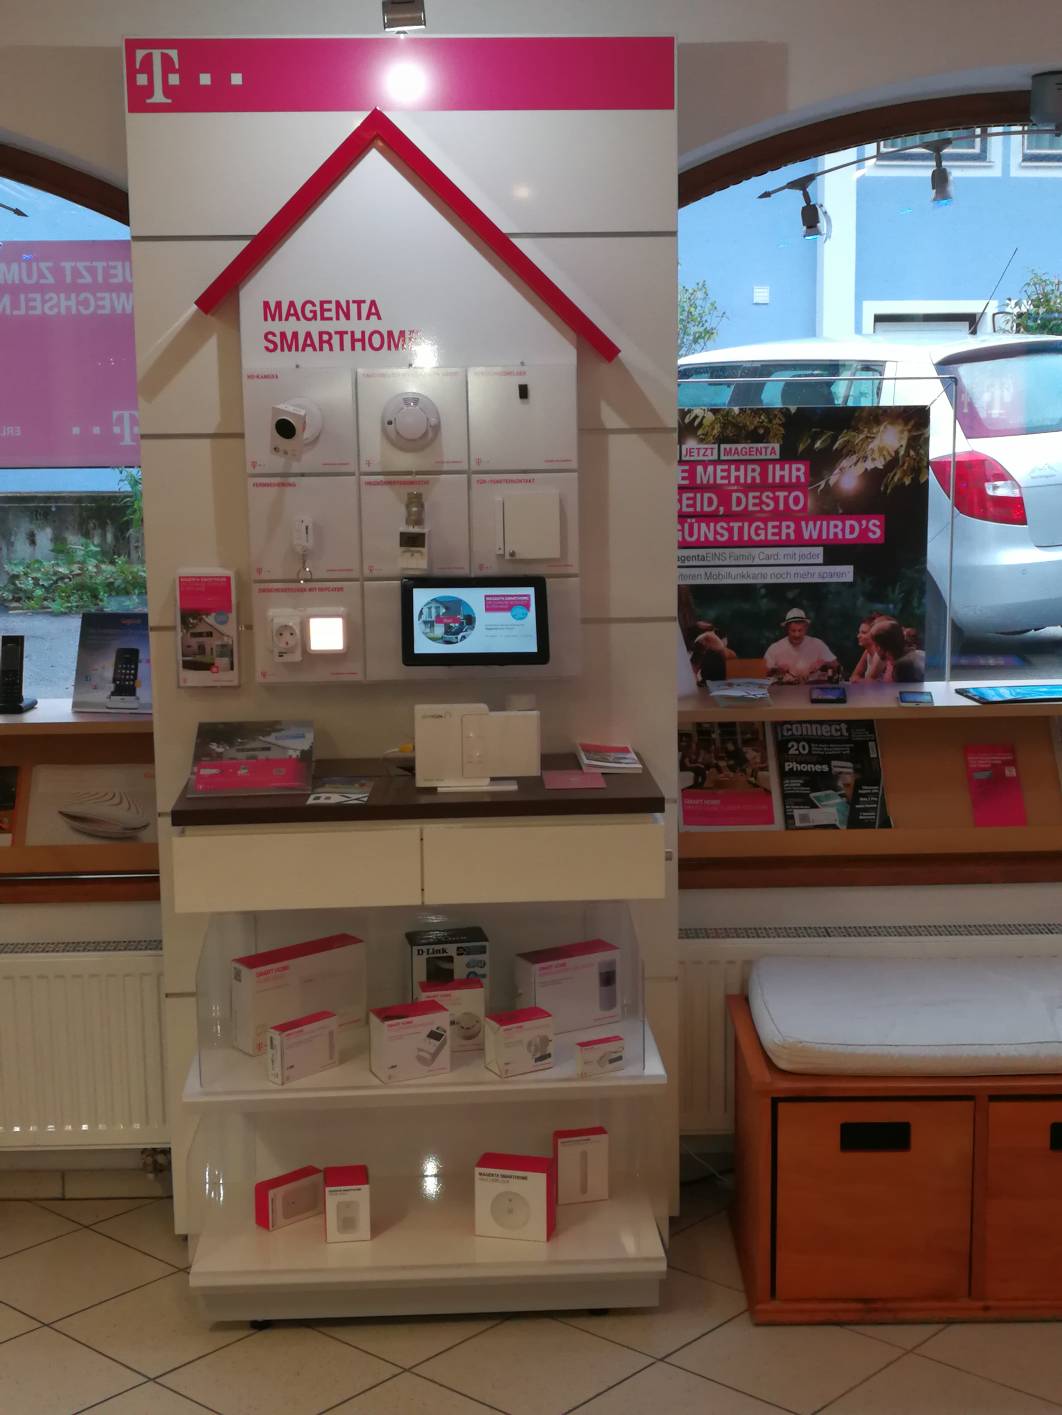 Verkaufspräsenter "Smart Home" der Telekom